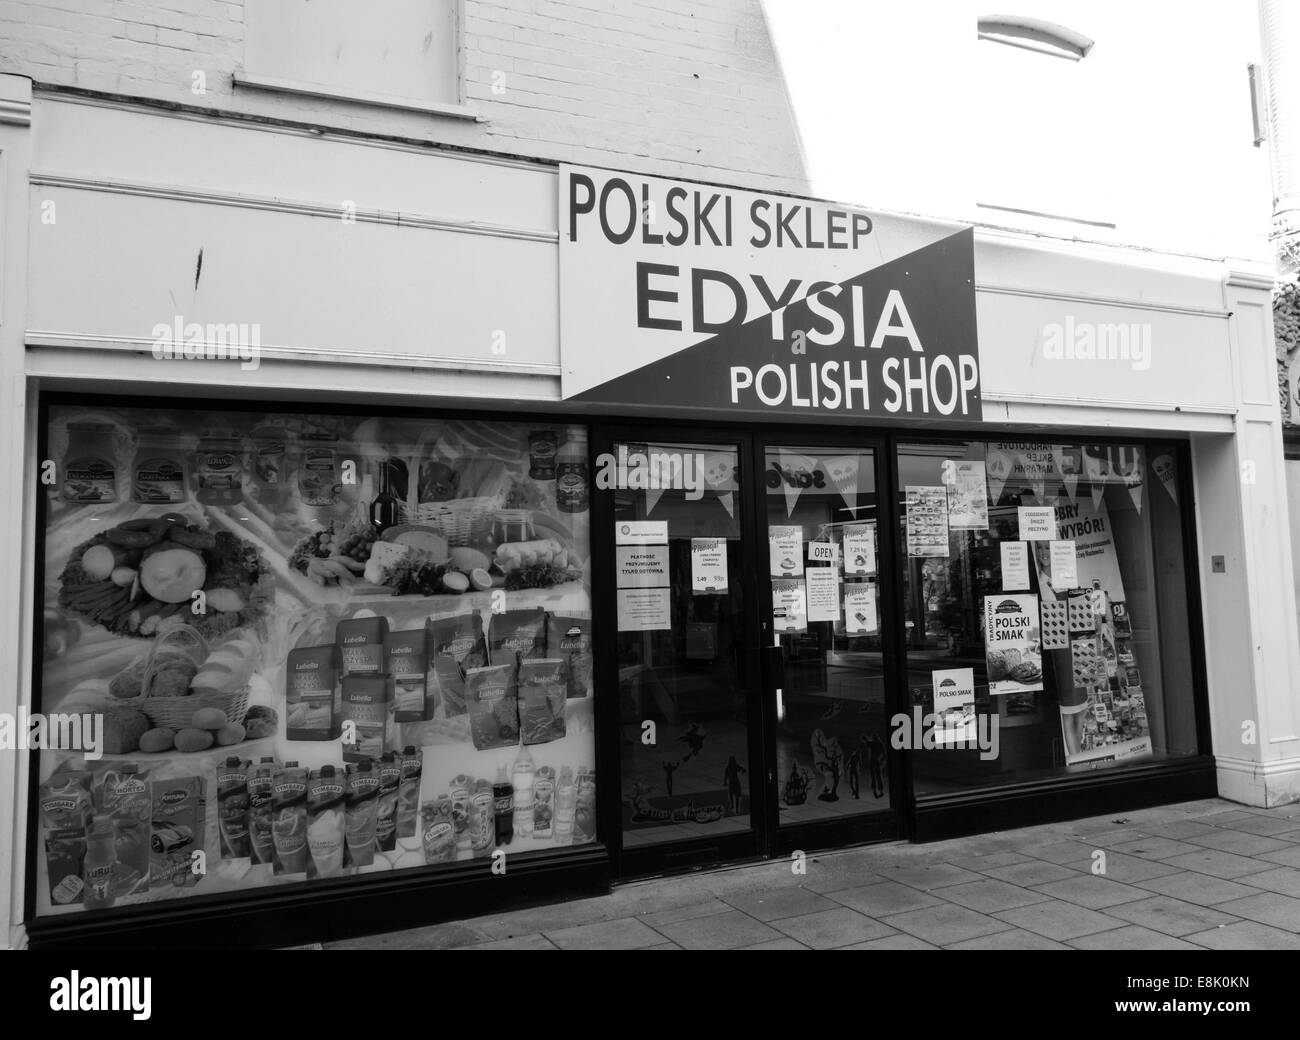 Polski Sklep High Resolution Stock Photography and Images - Alamy